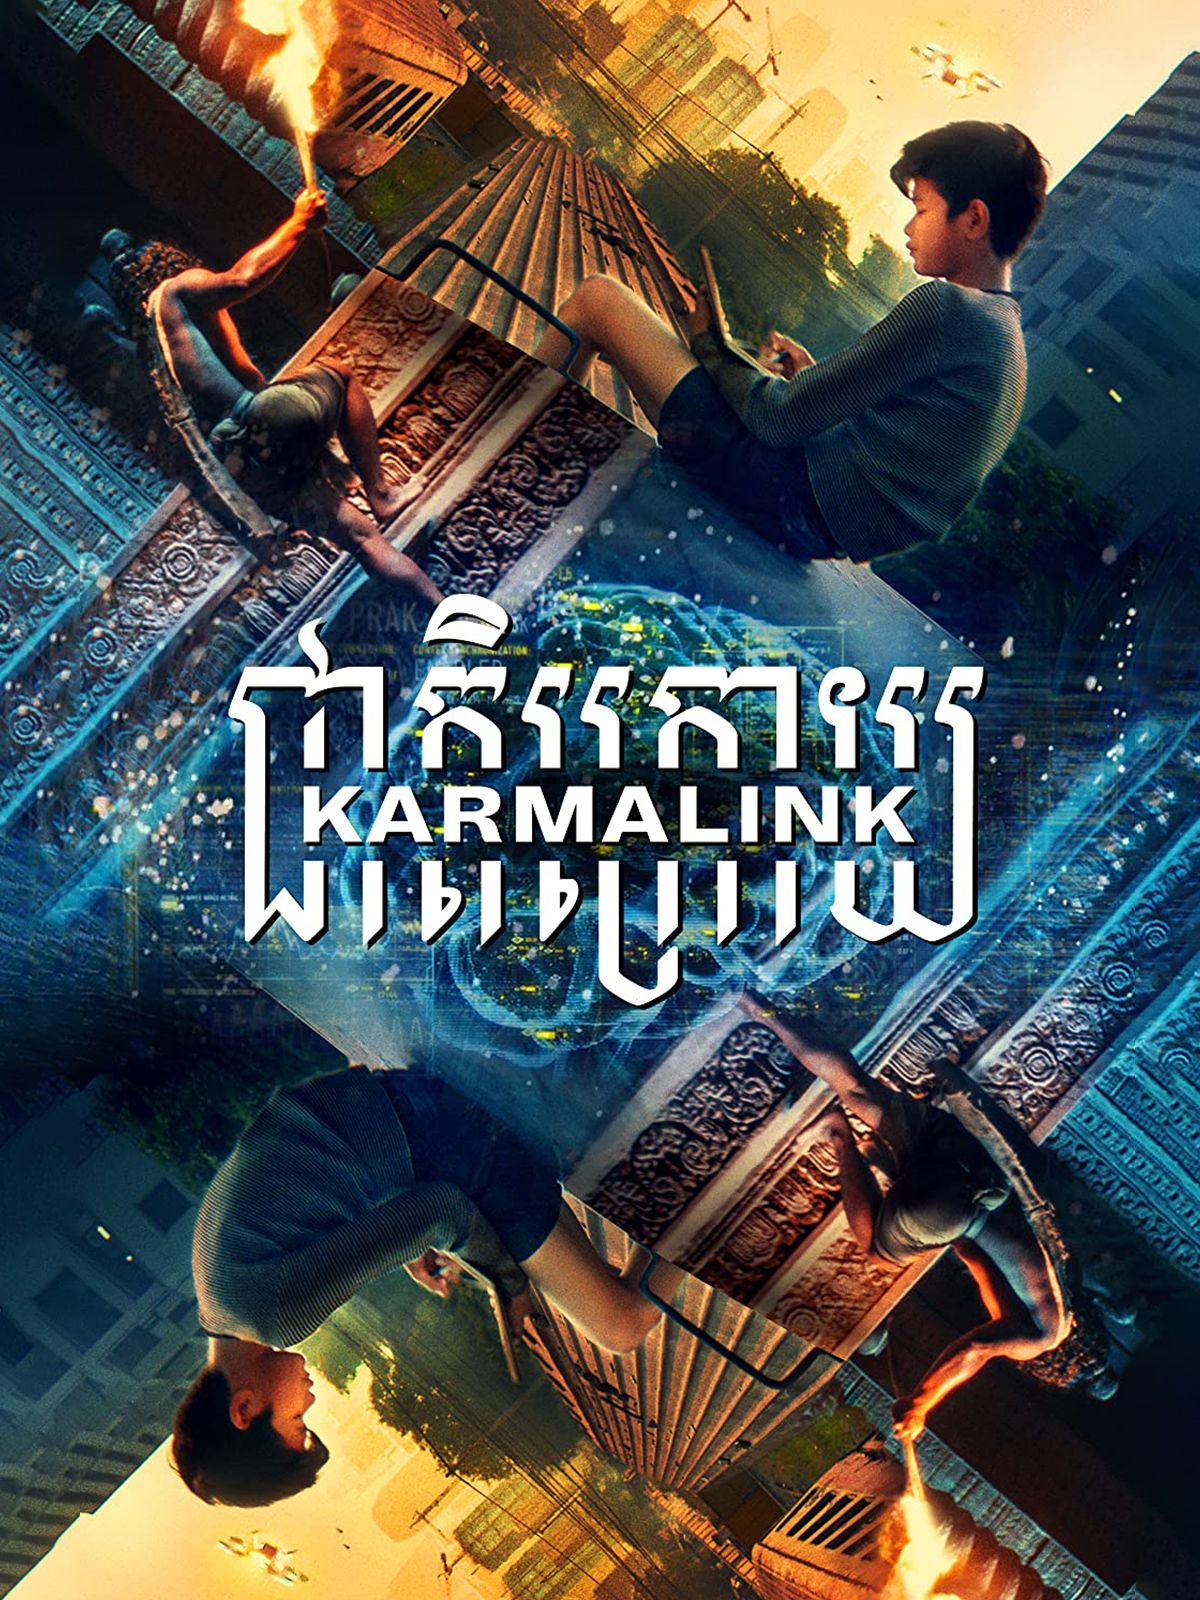 Karmalink Movie Poster